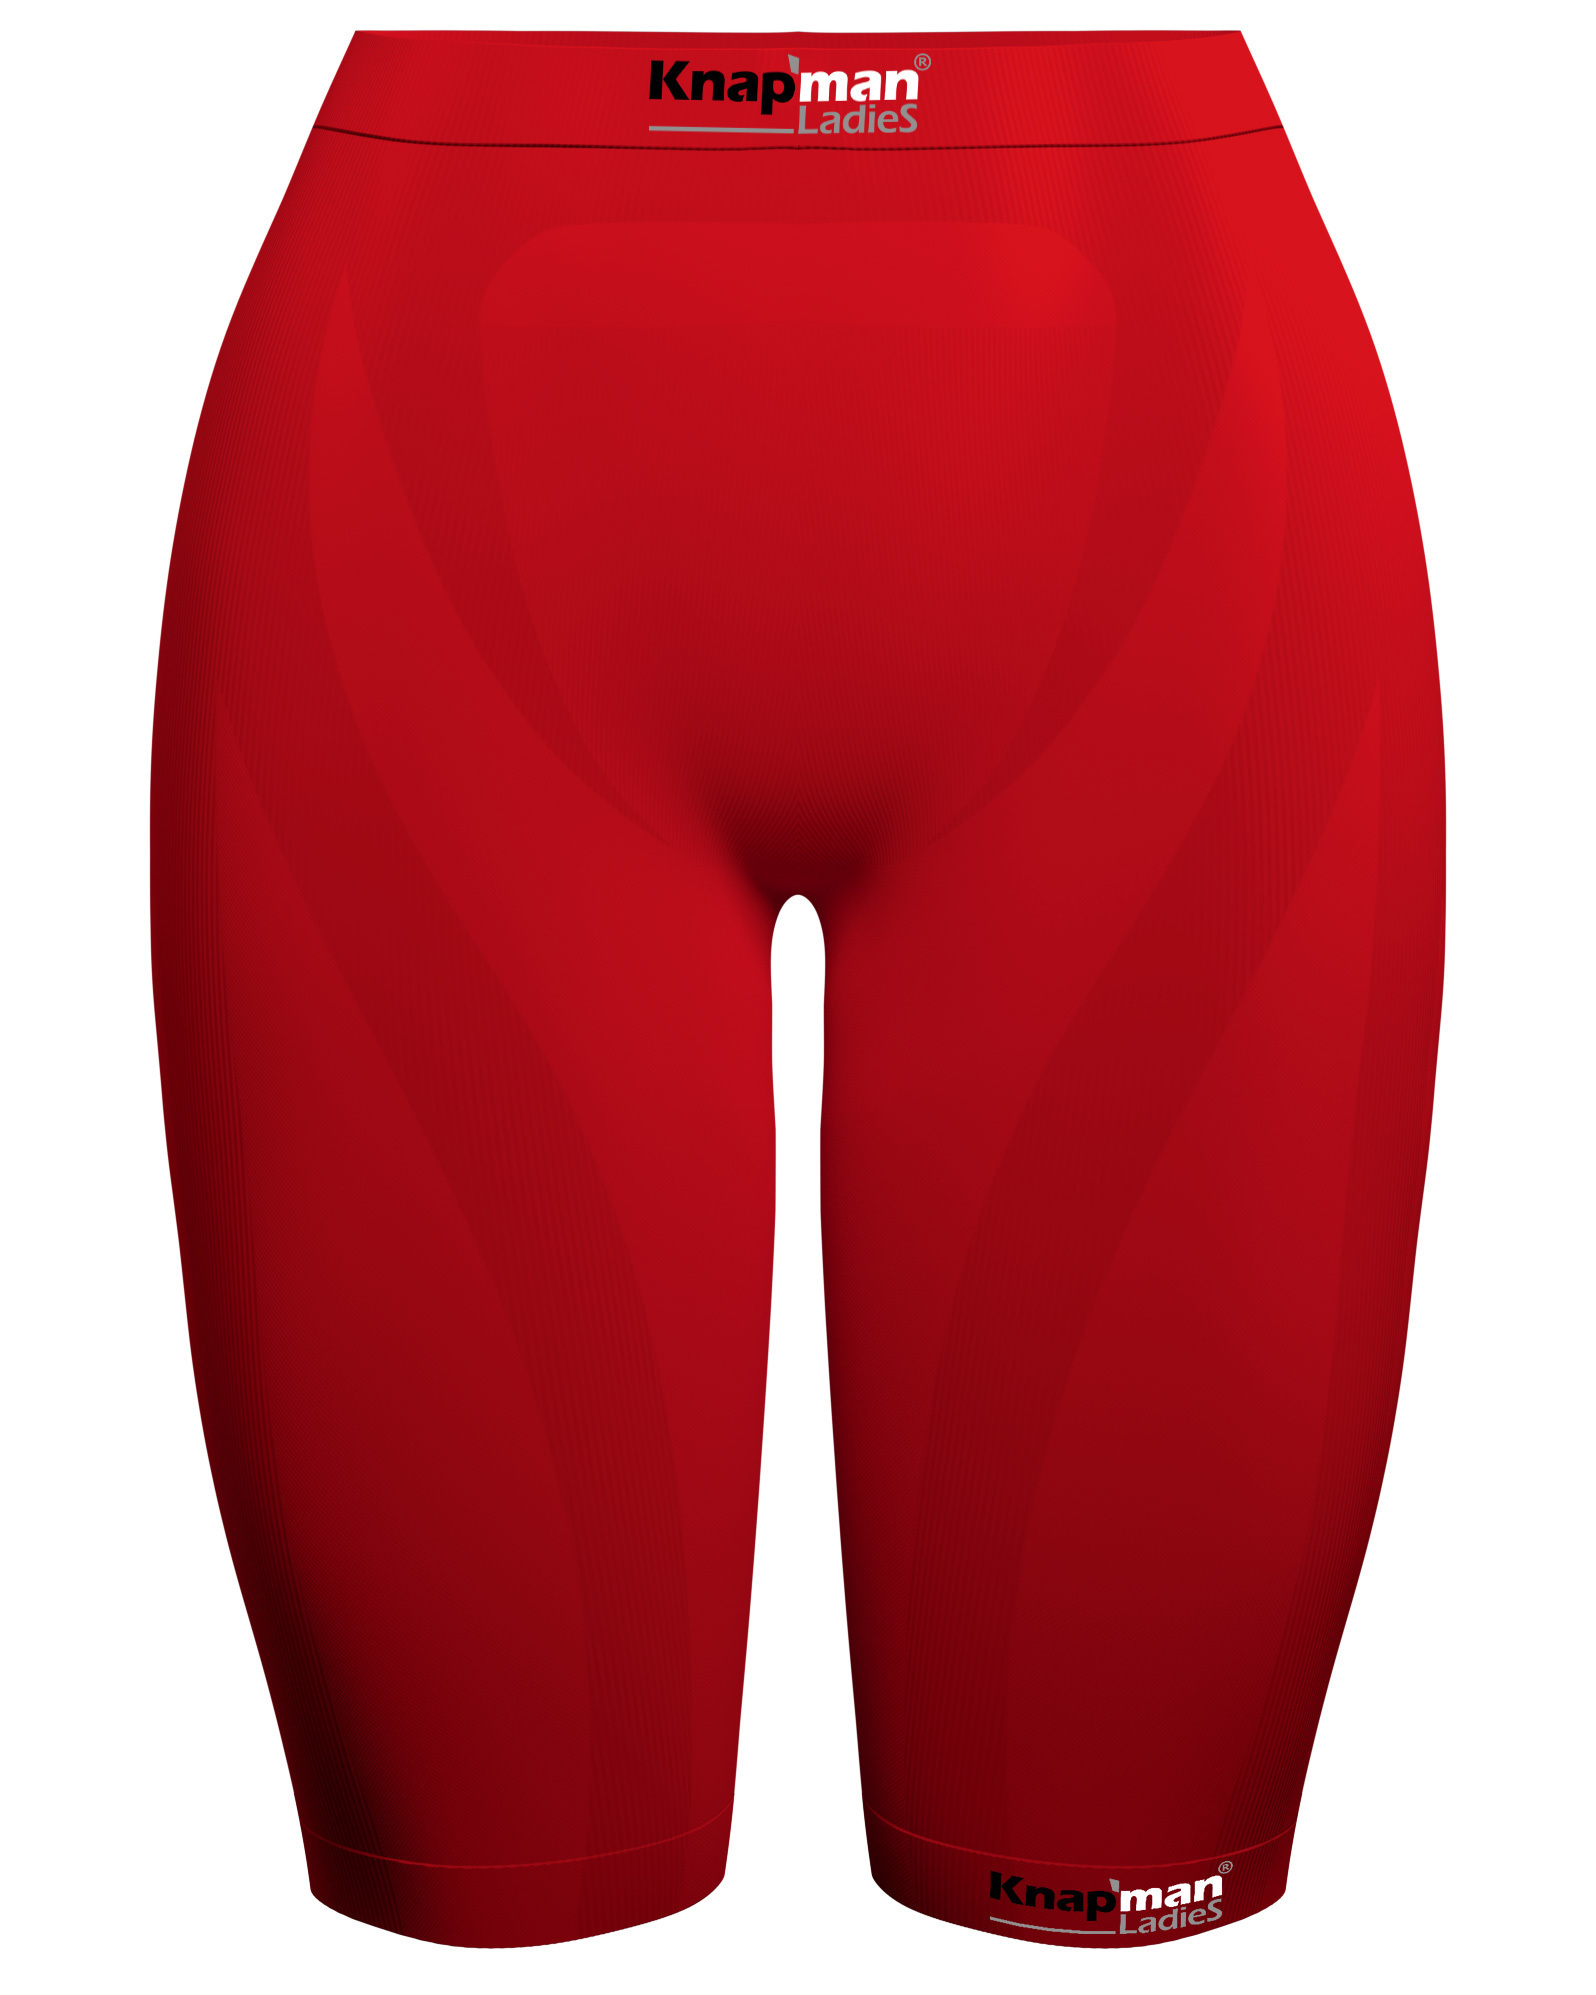 Knap'man Women's Compression Shorts Red - 45%